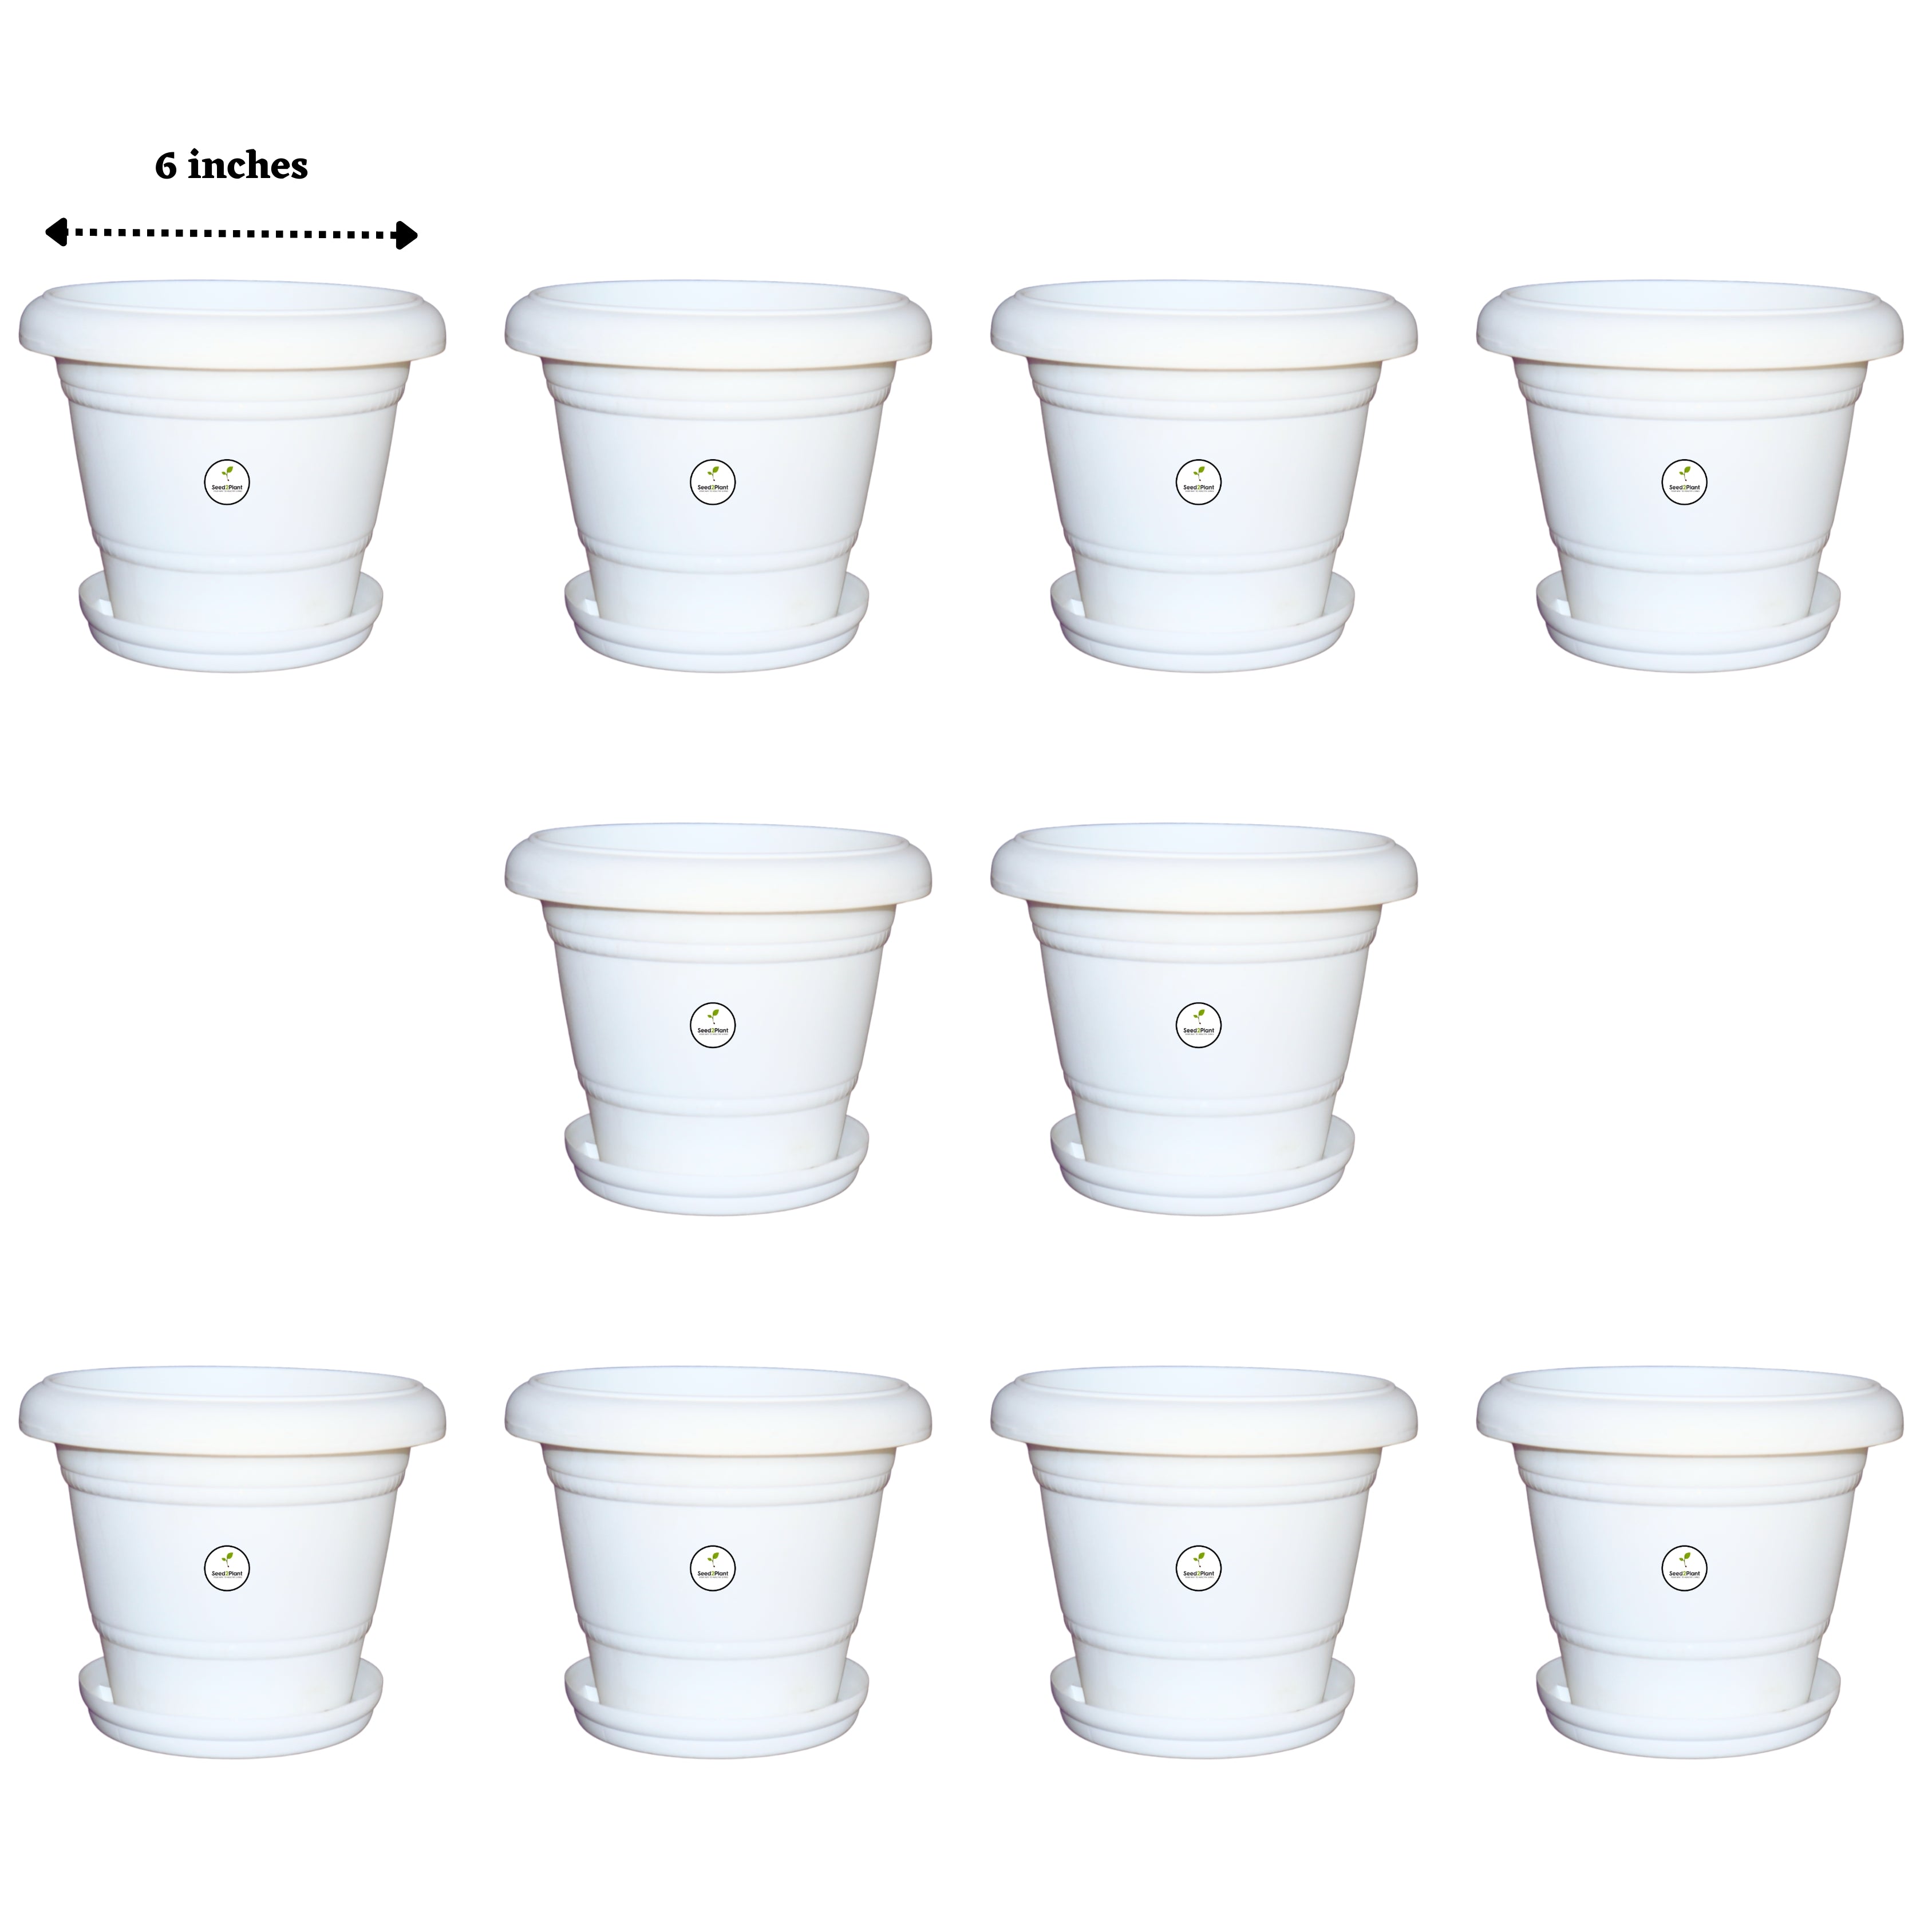 6 Inch UV Treated Plastic Pots - White Colour